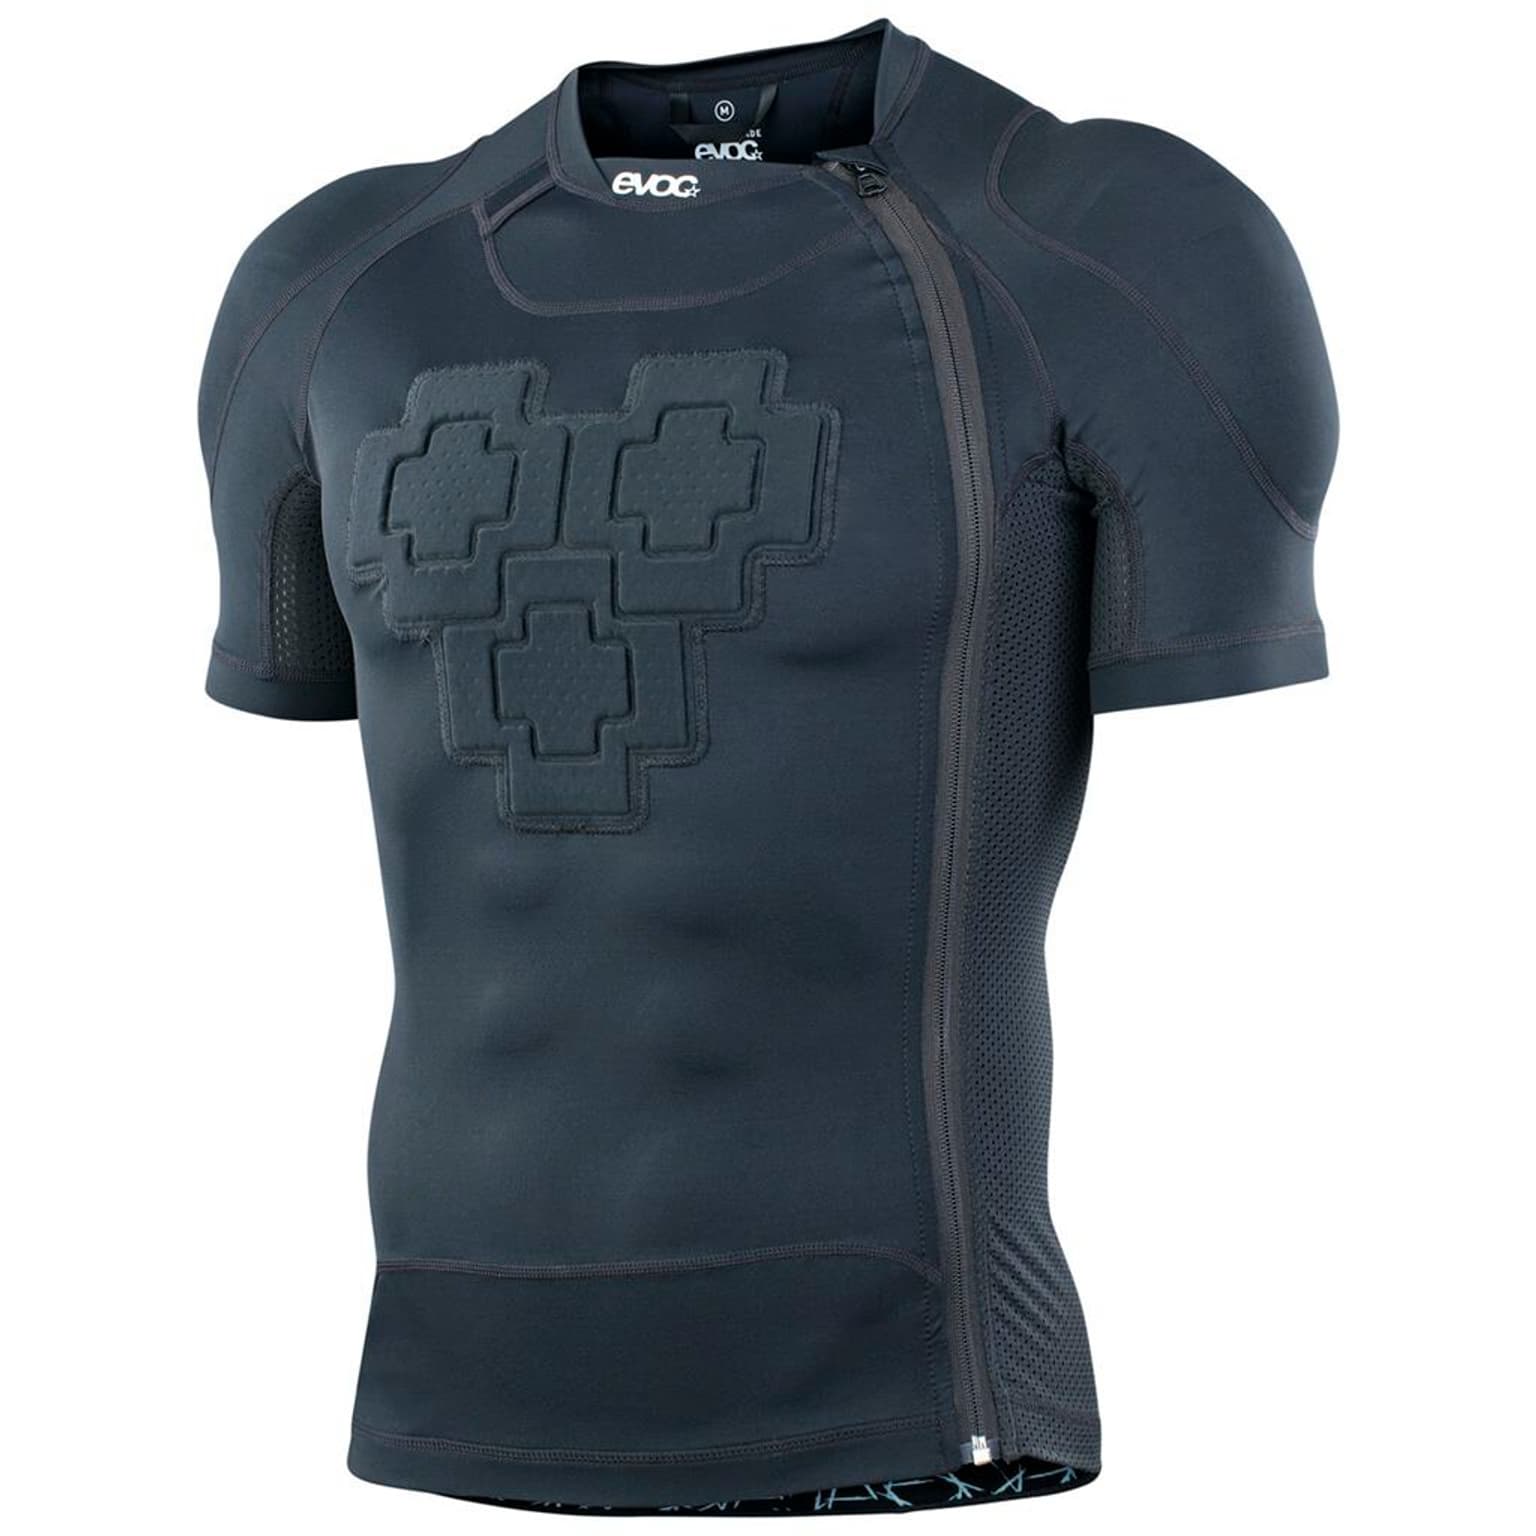 Evoc Evoc Protector Shirt Zip protections noir 2